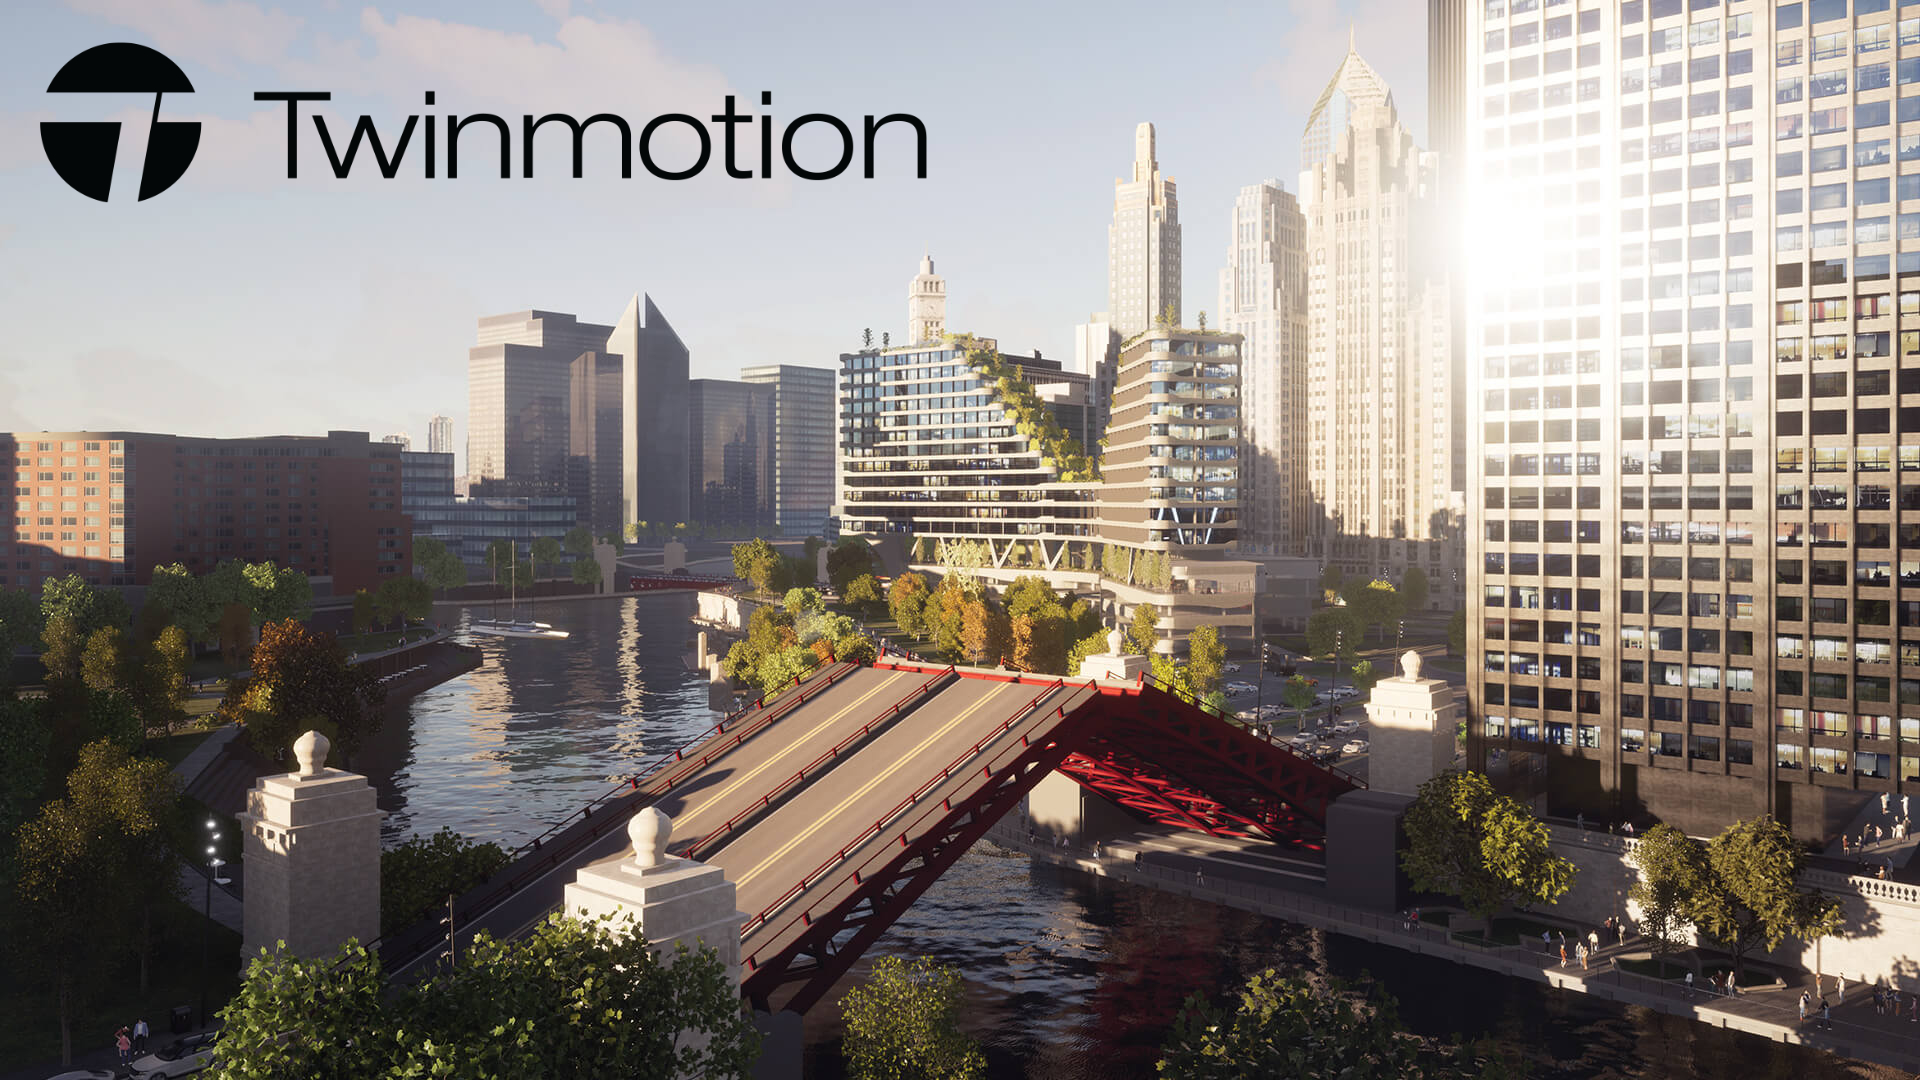 bimmotion twinmotion 2021